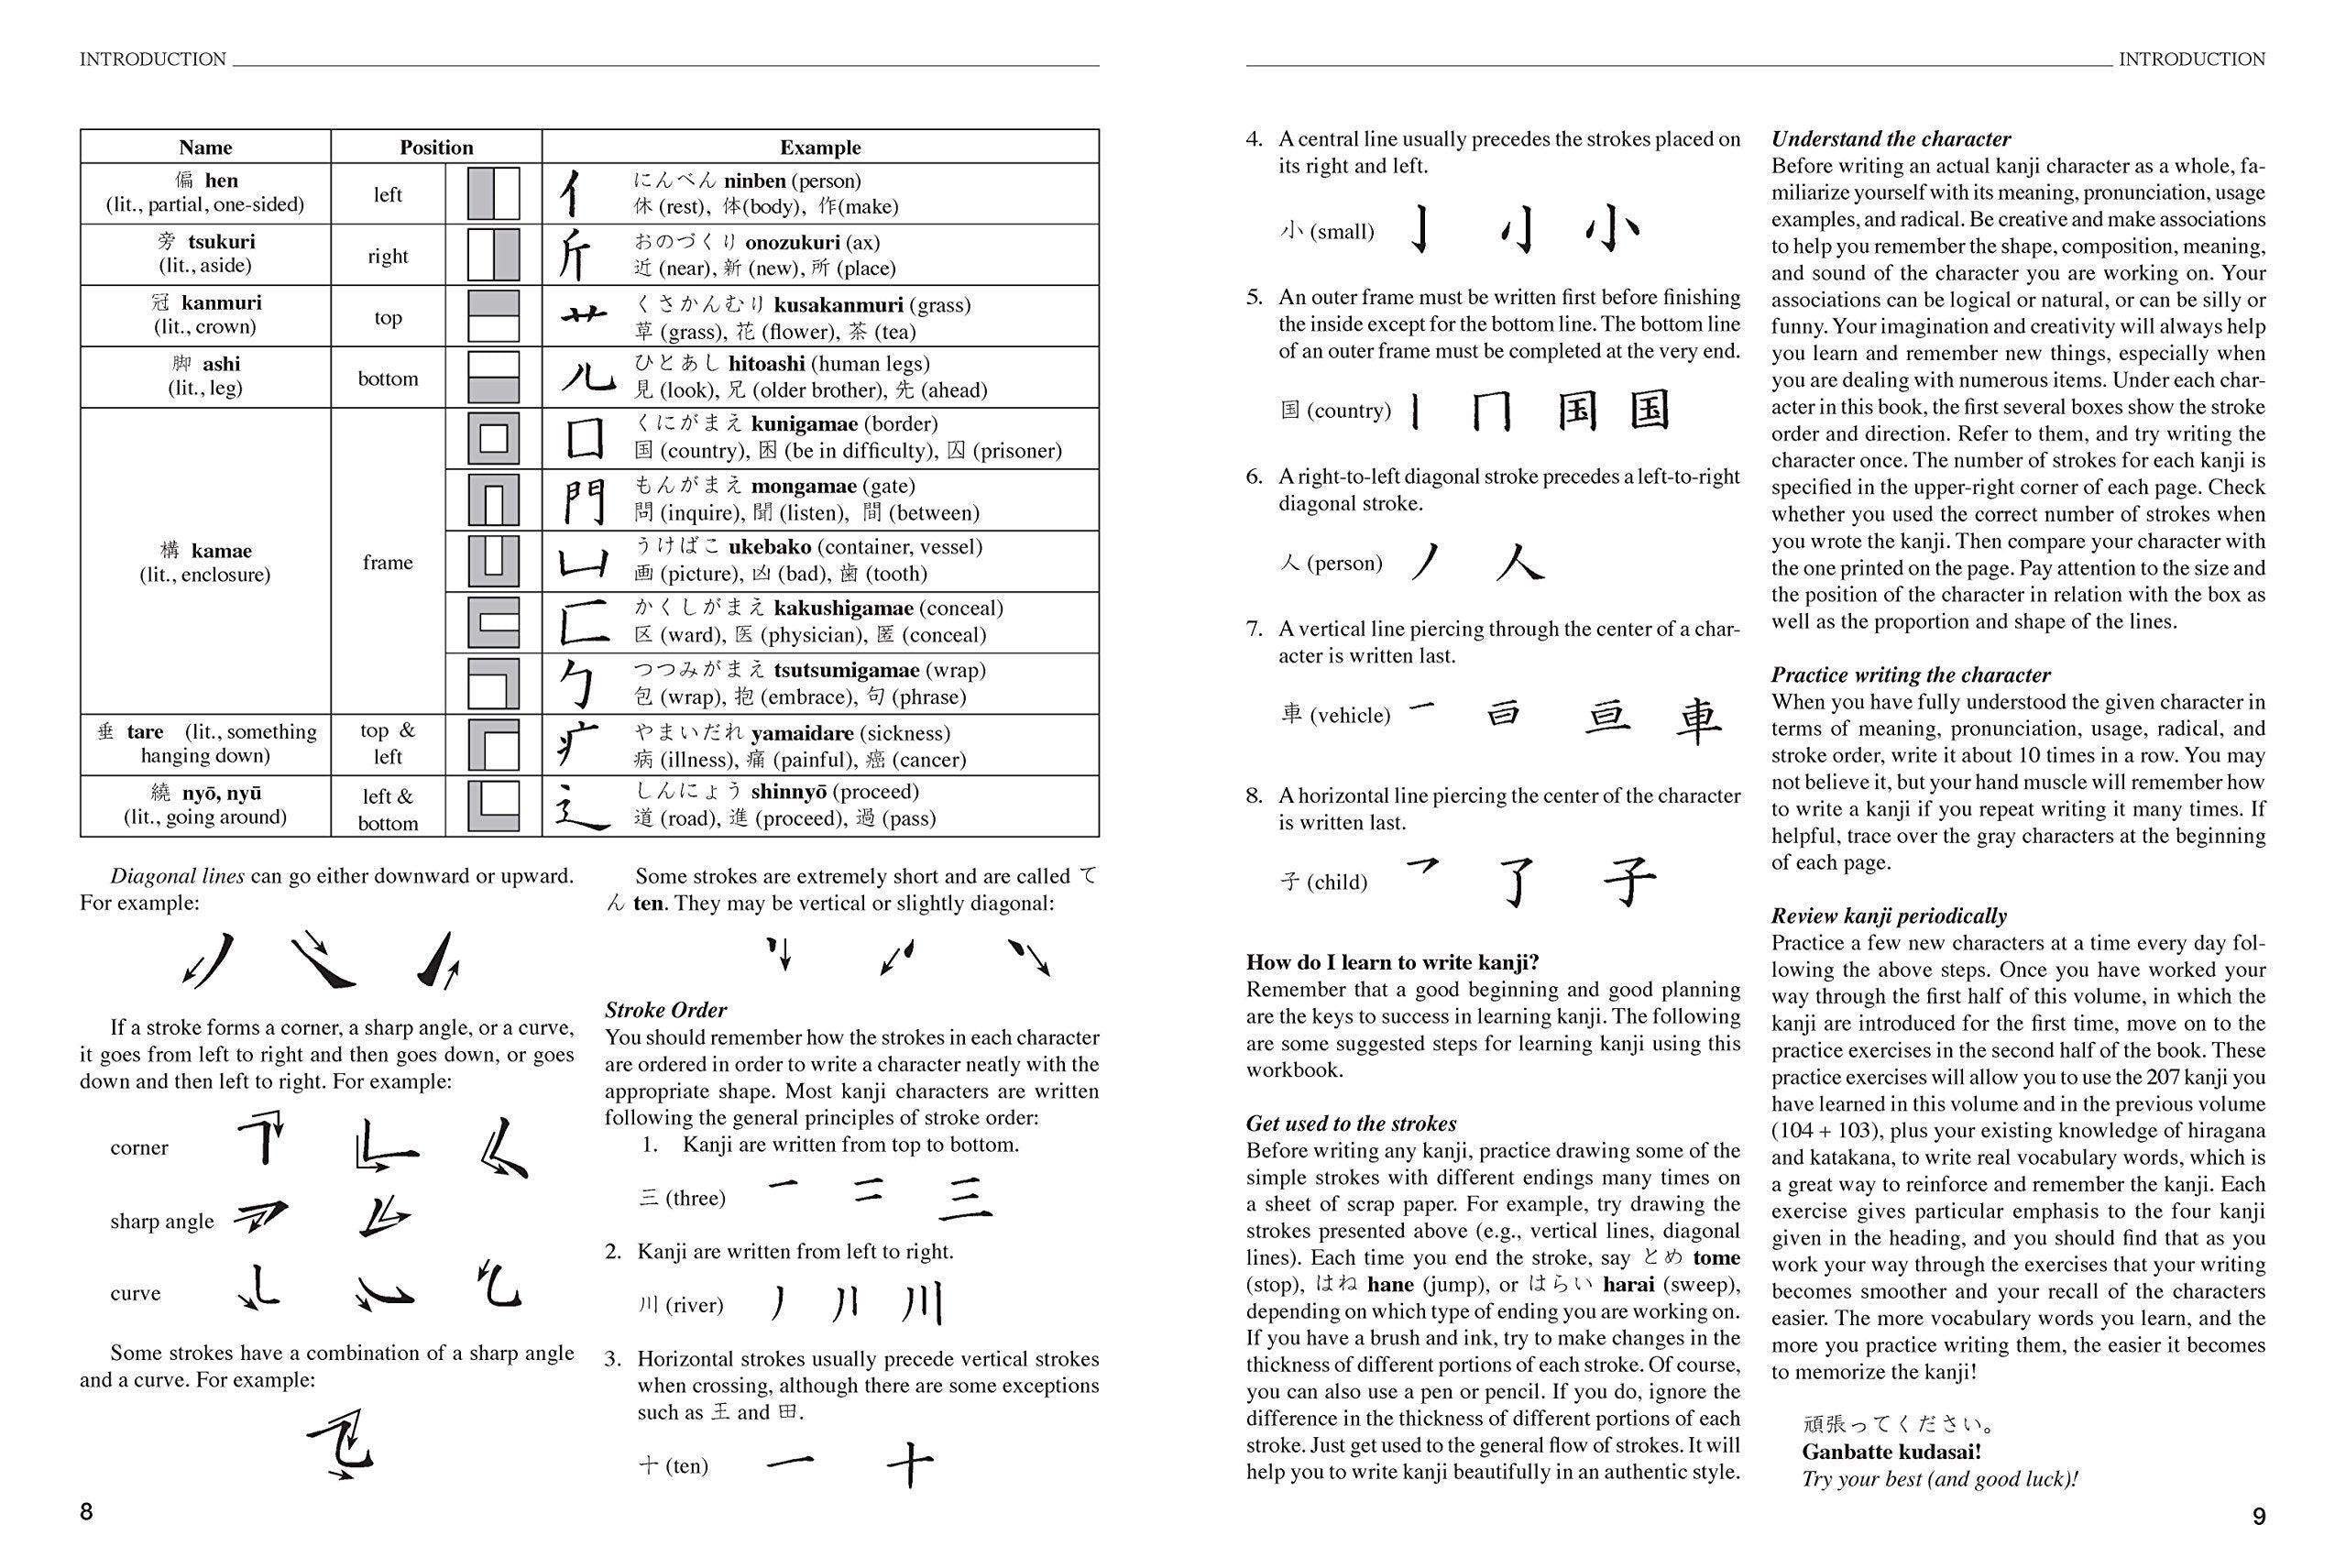 Learning Japanese Kanji Practice Book Volume 2: (JLPT Level N4 & AP Exam) The Quick and Easy Way to Learn the Basic Japanese Kanji - Tankobonbon